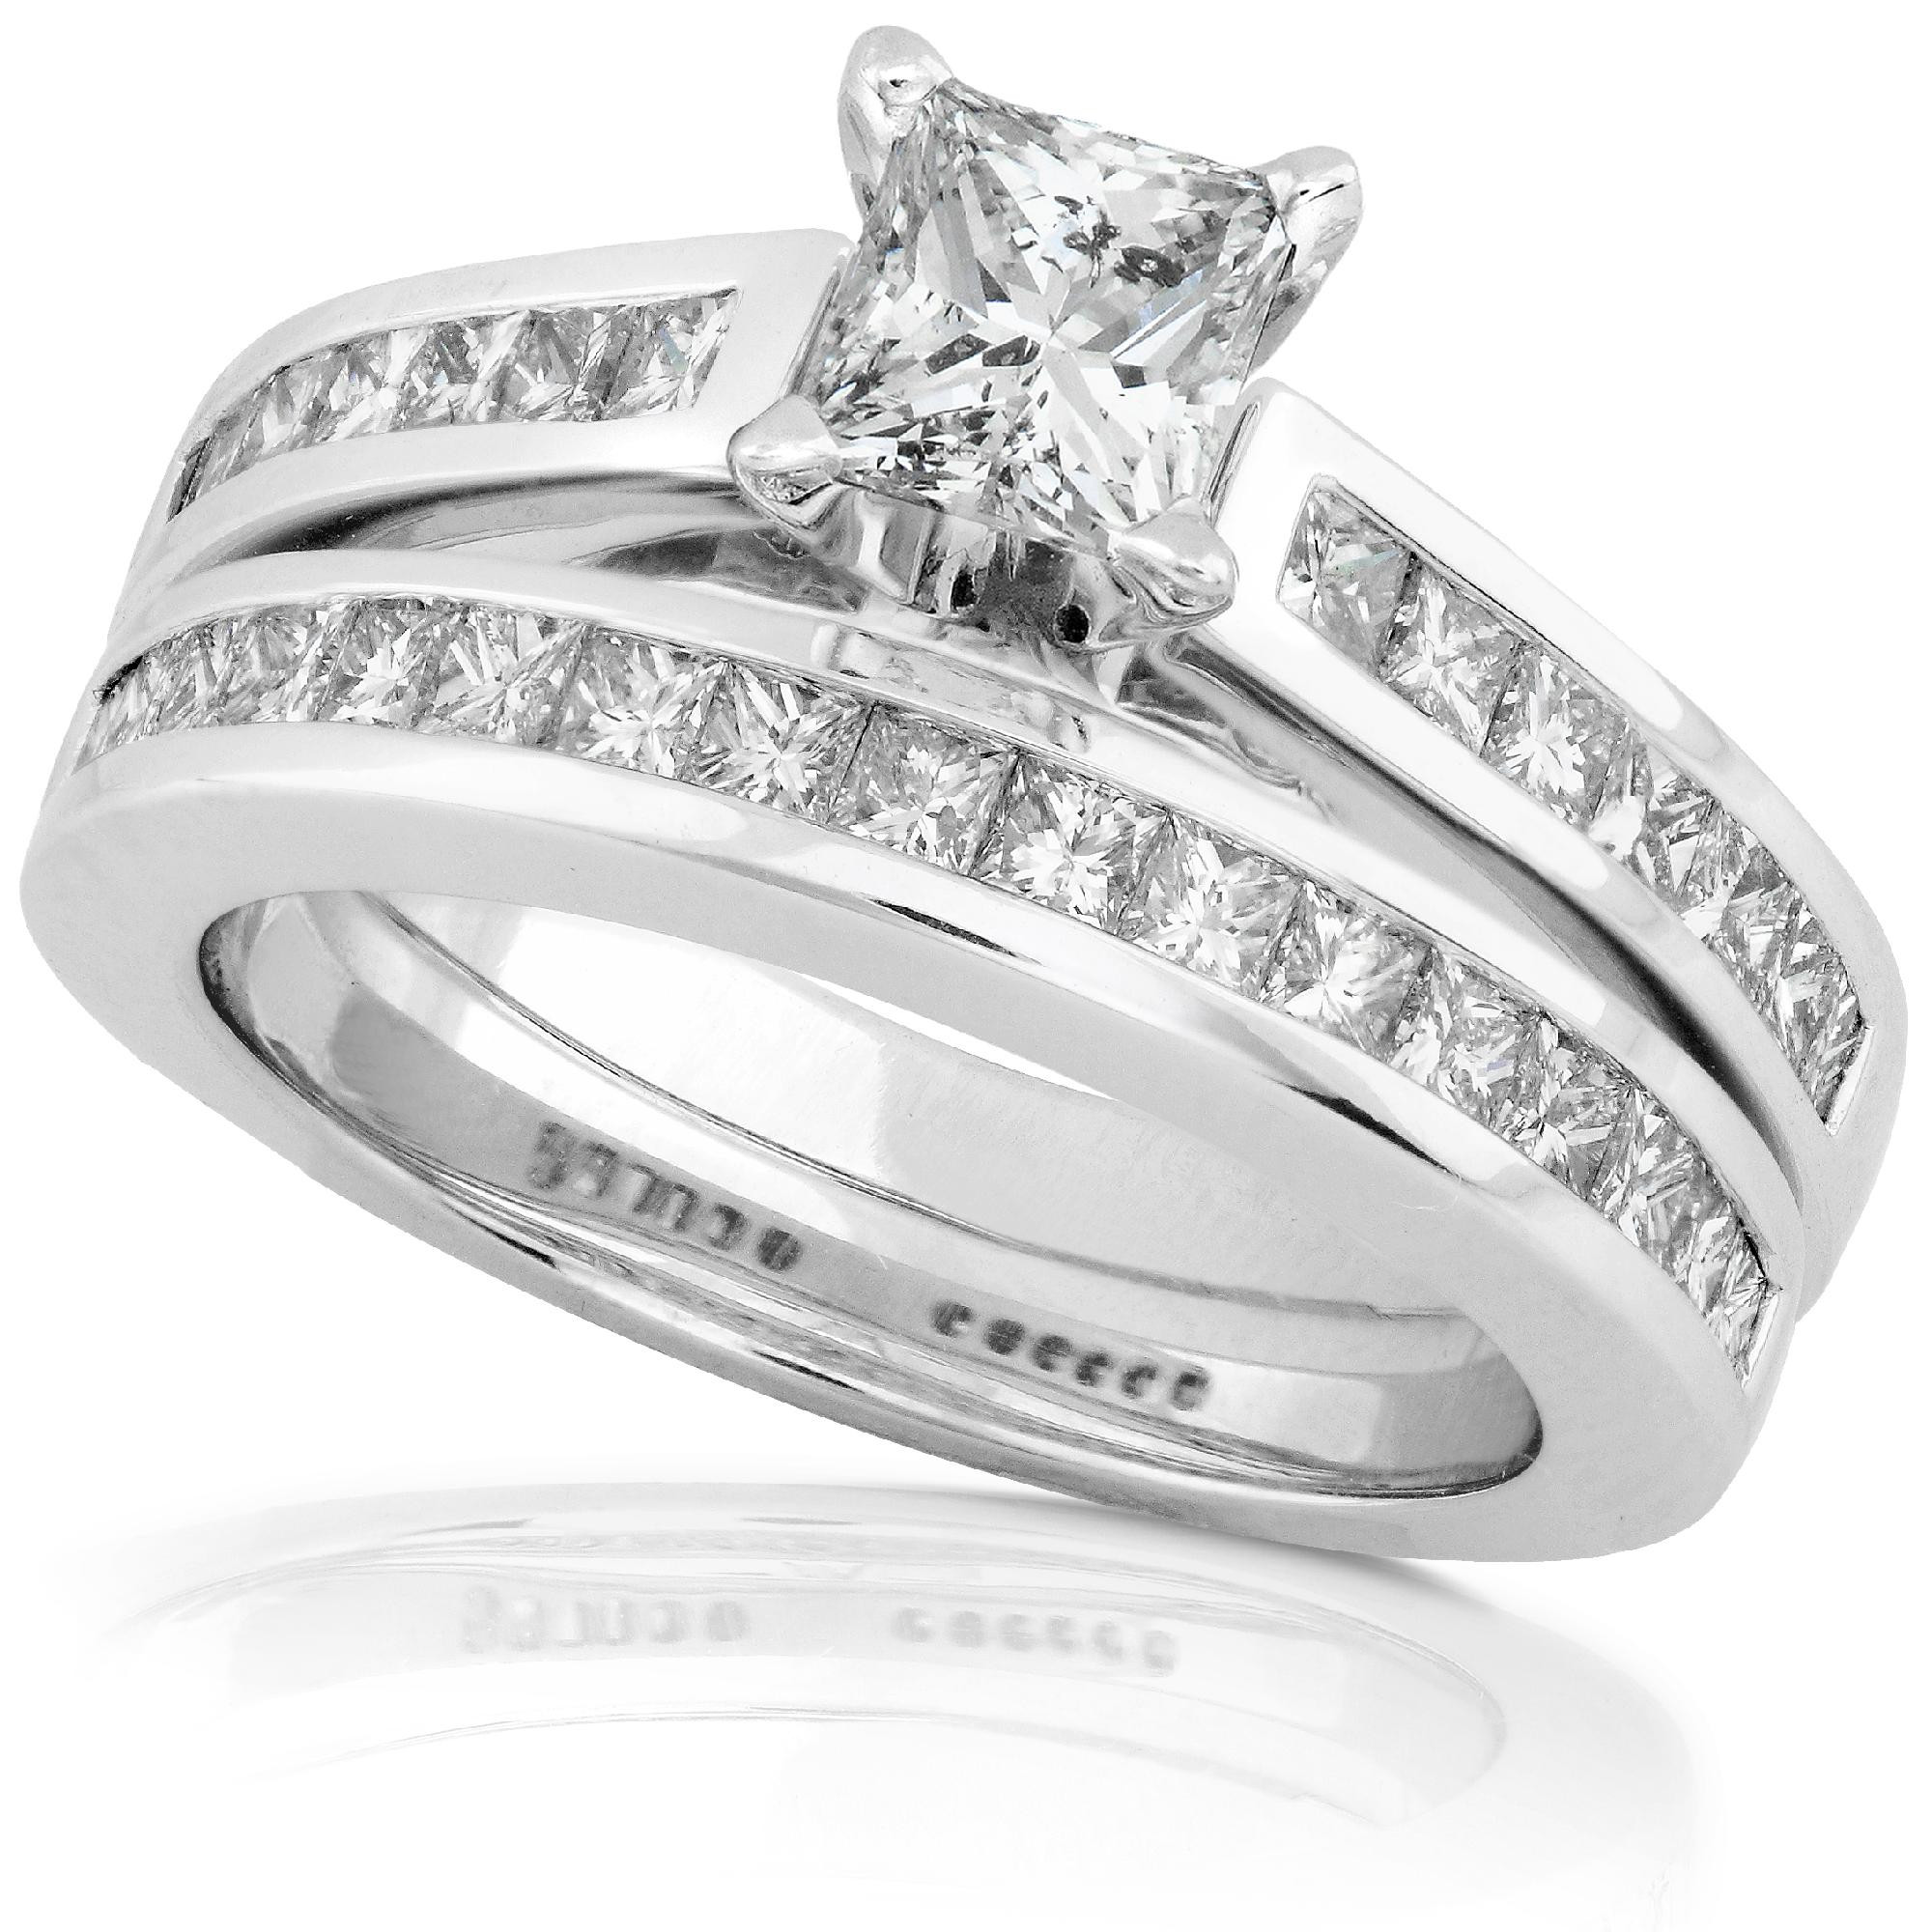 Kmart Wedding Ring Sets
 Engagement Rings Sale